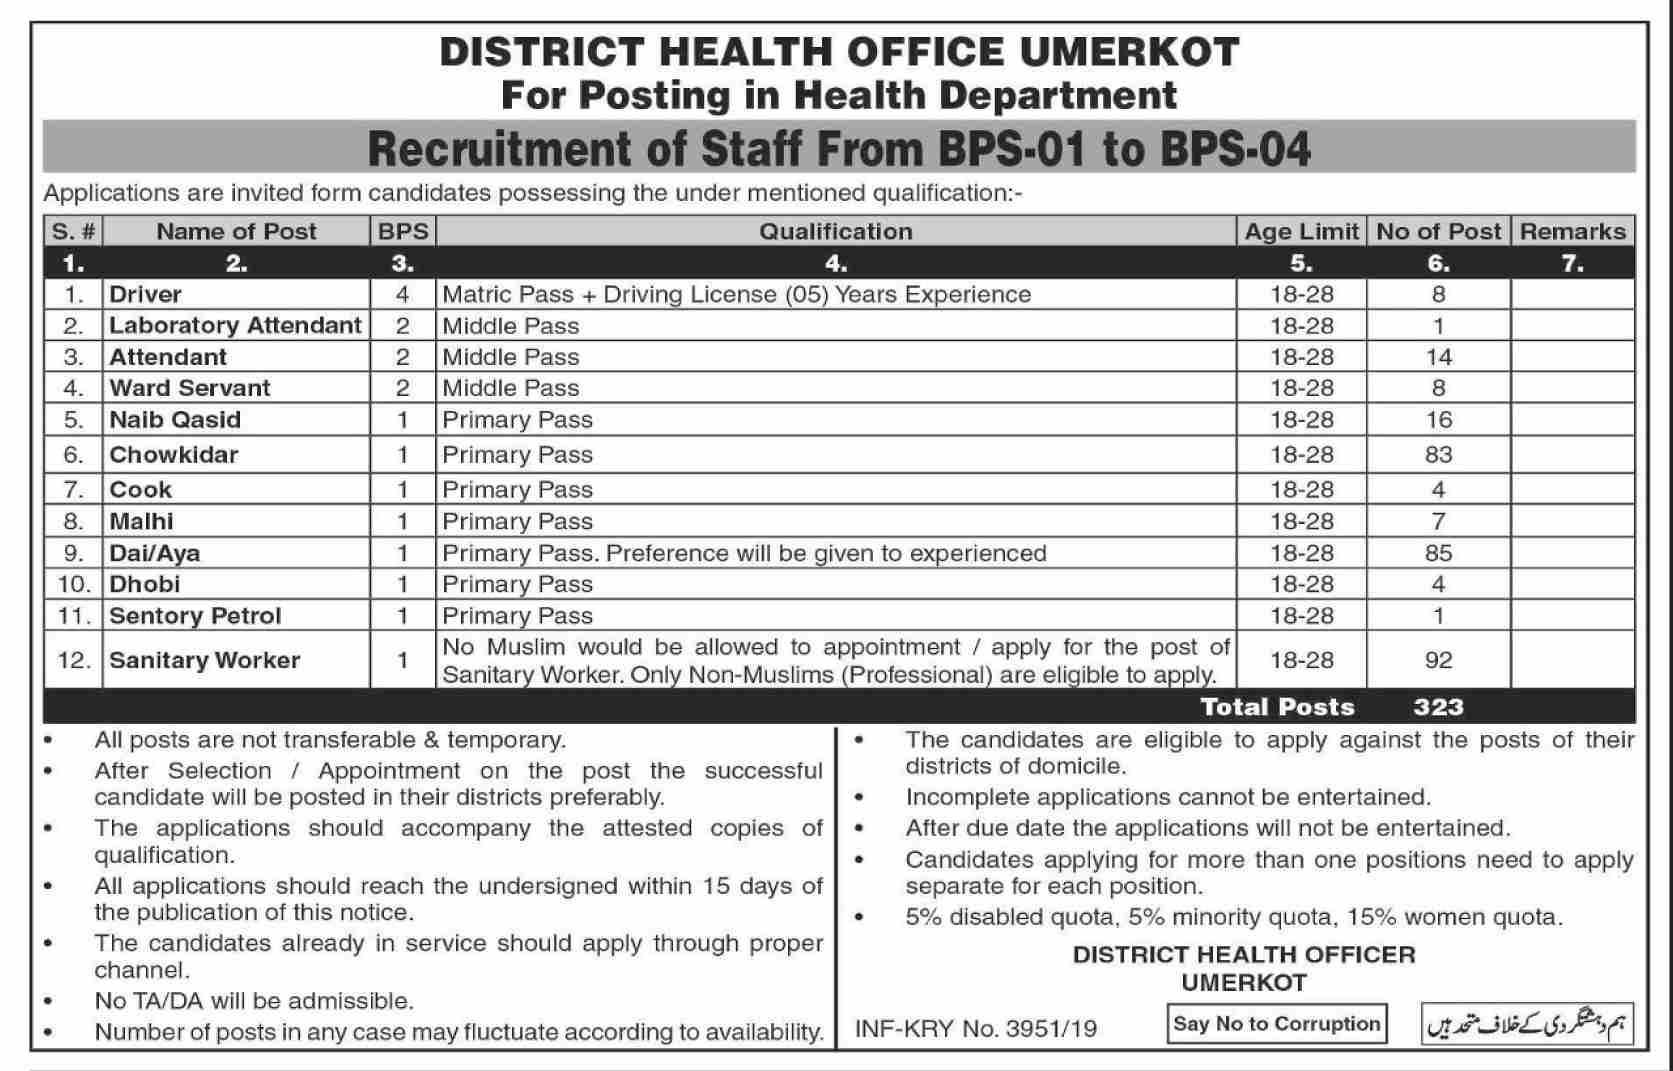 Health Department Govt of Sindh jobs 2019